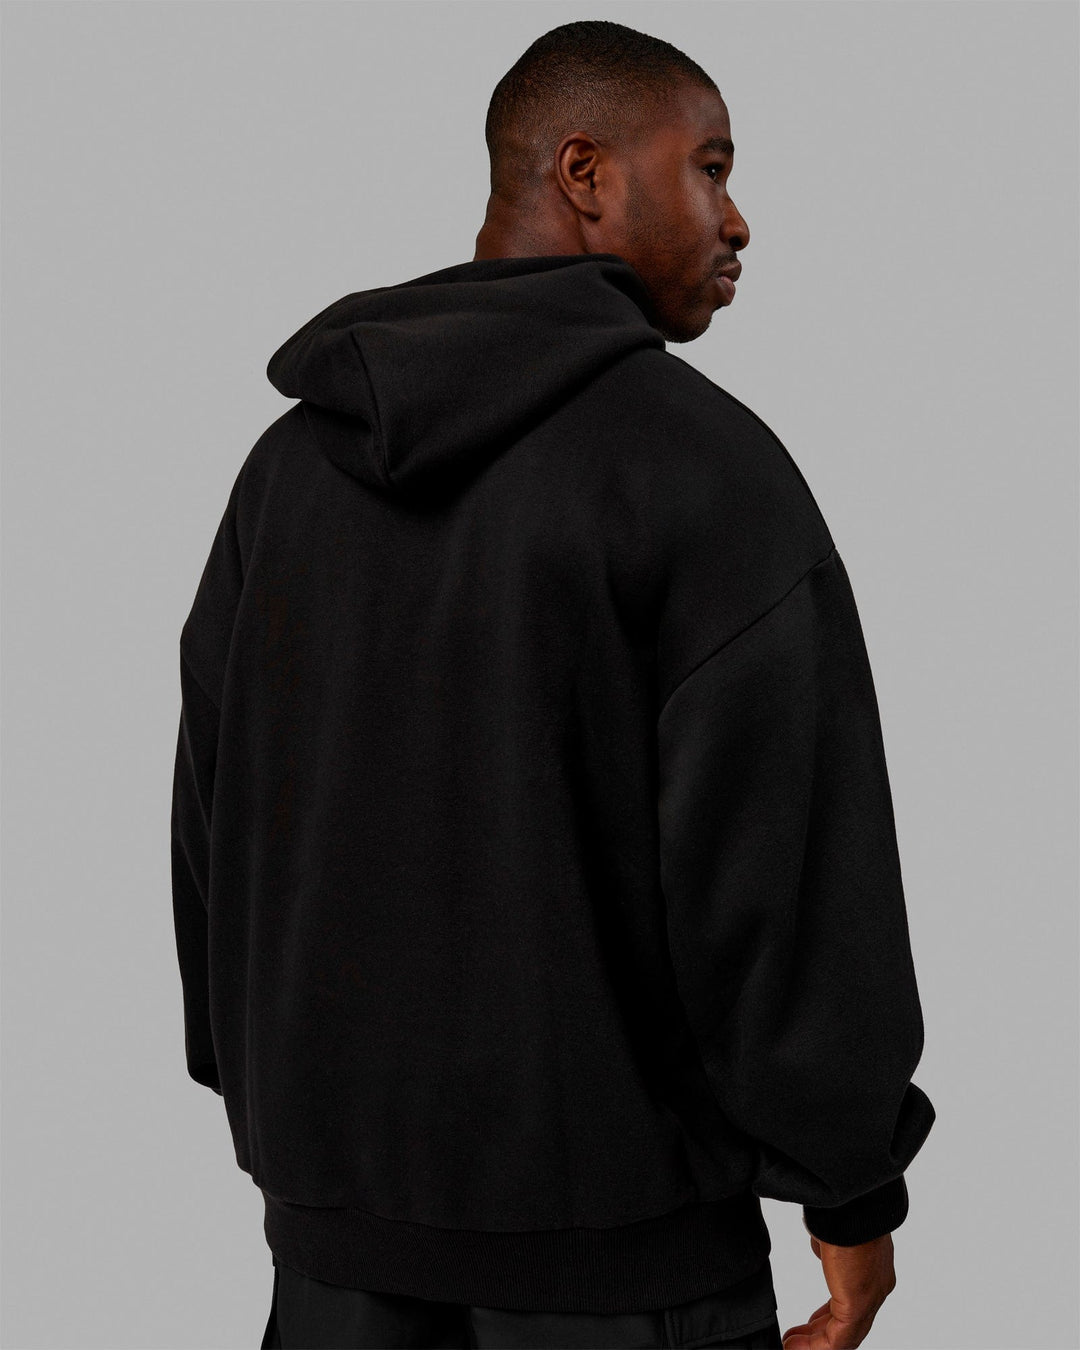 Man wearing Unisex Stamped Hoodie Oversize - Black